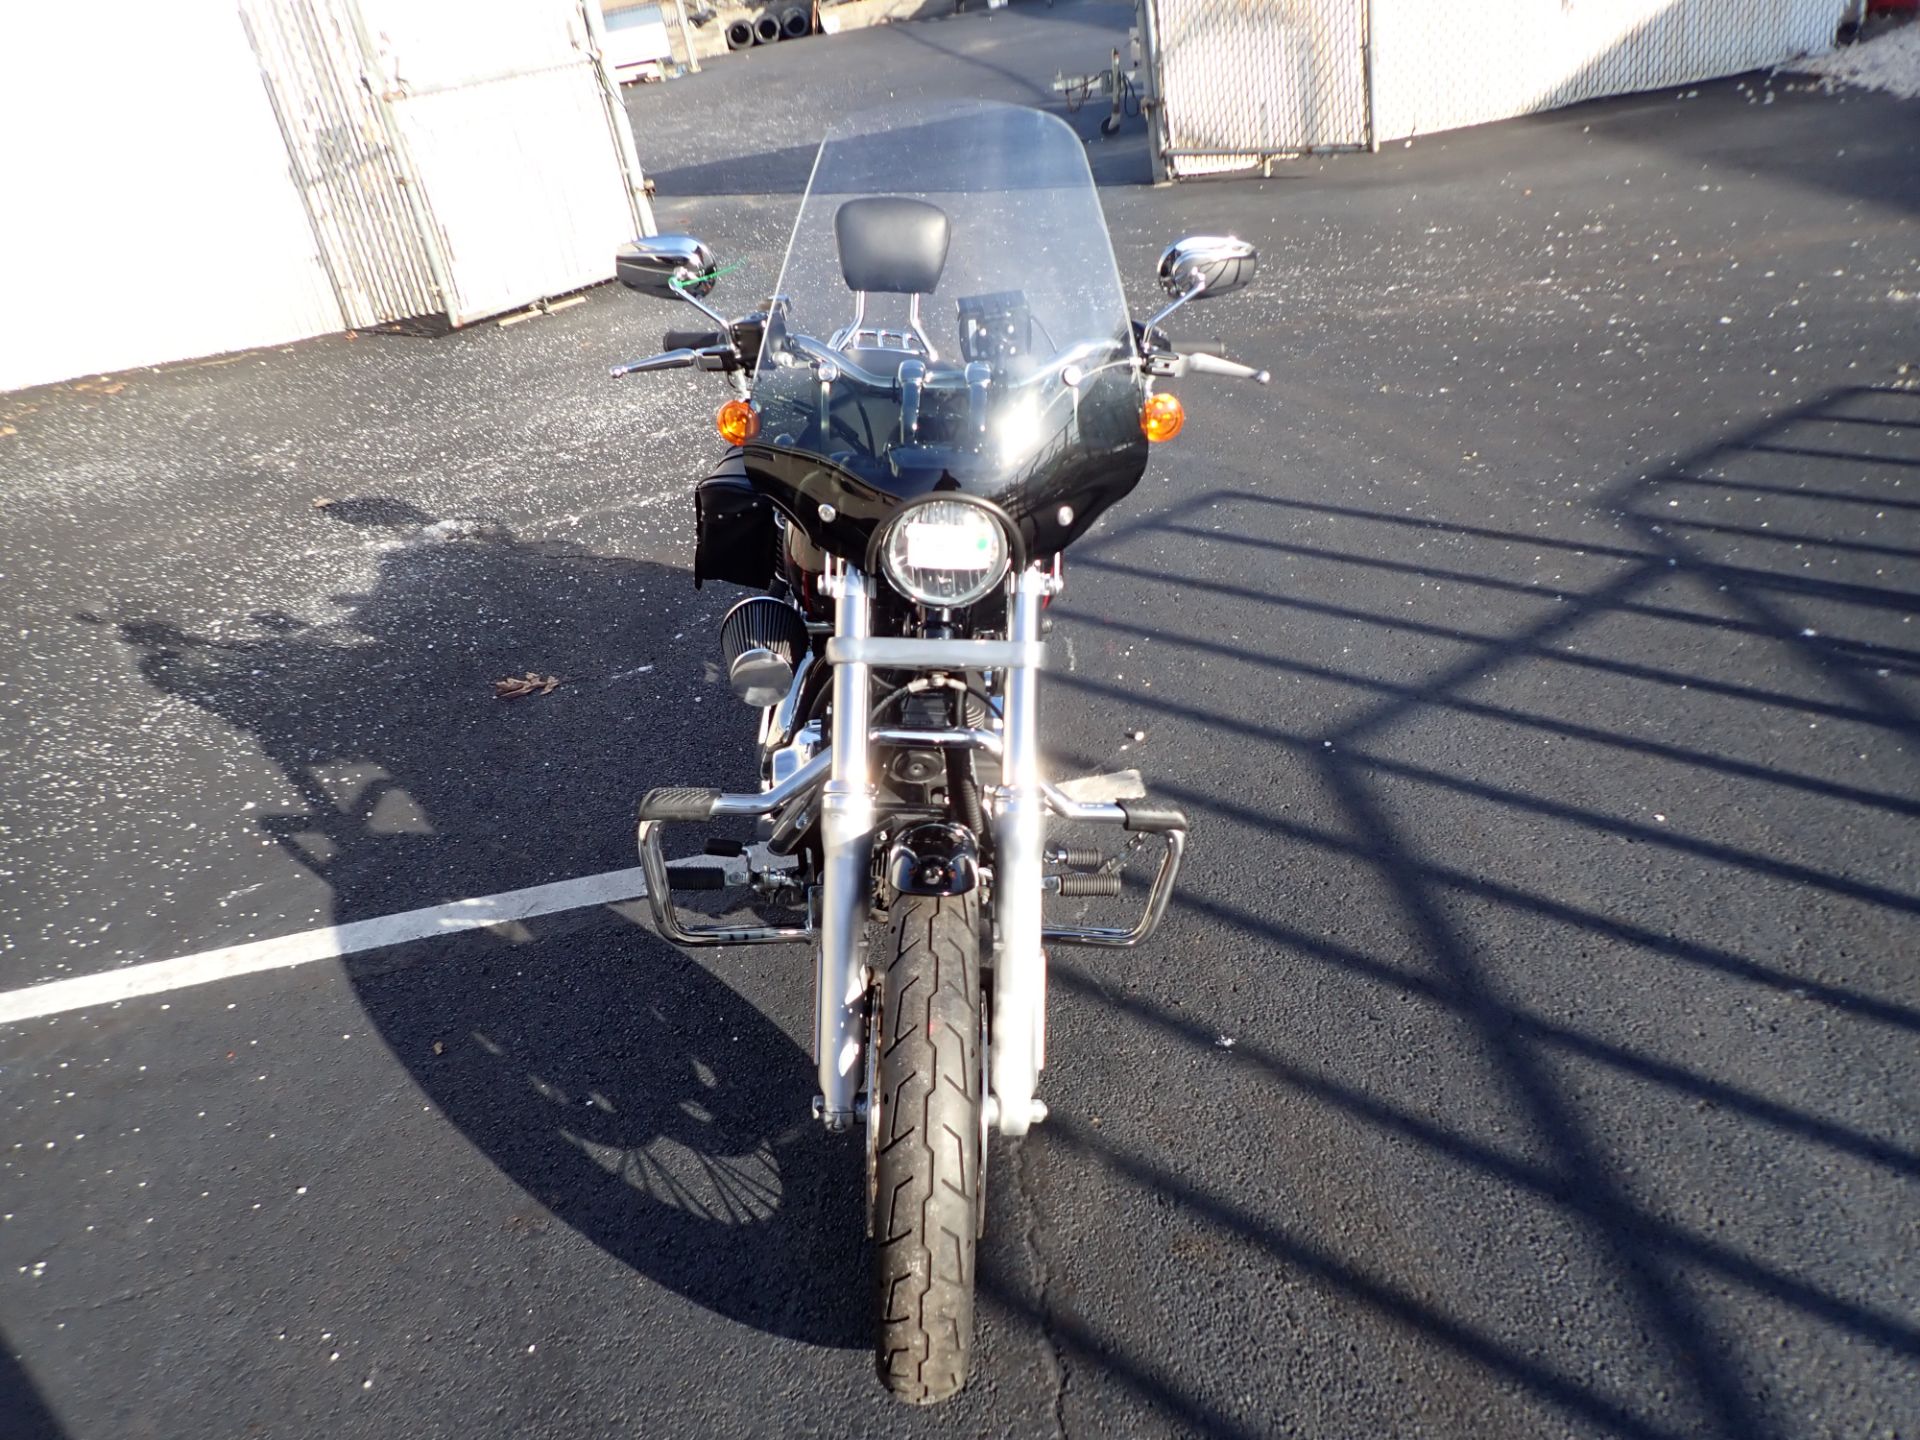 2015 Harley-Davidson Low Rider® in Massillon, Ohio - Photo 5